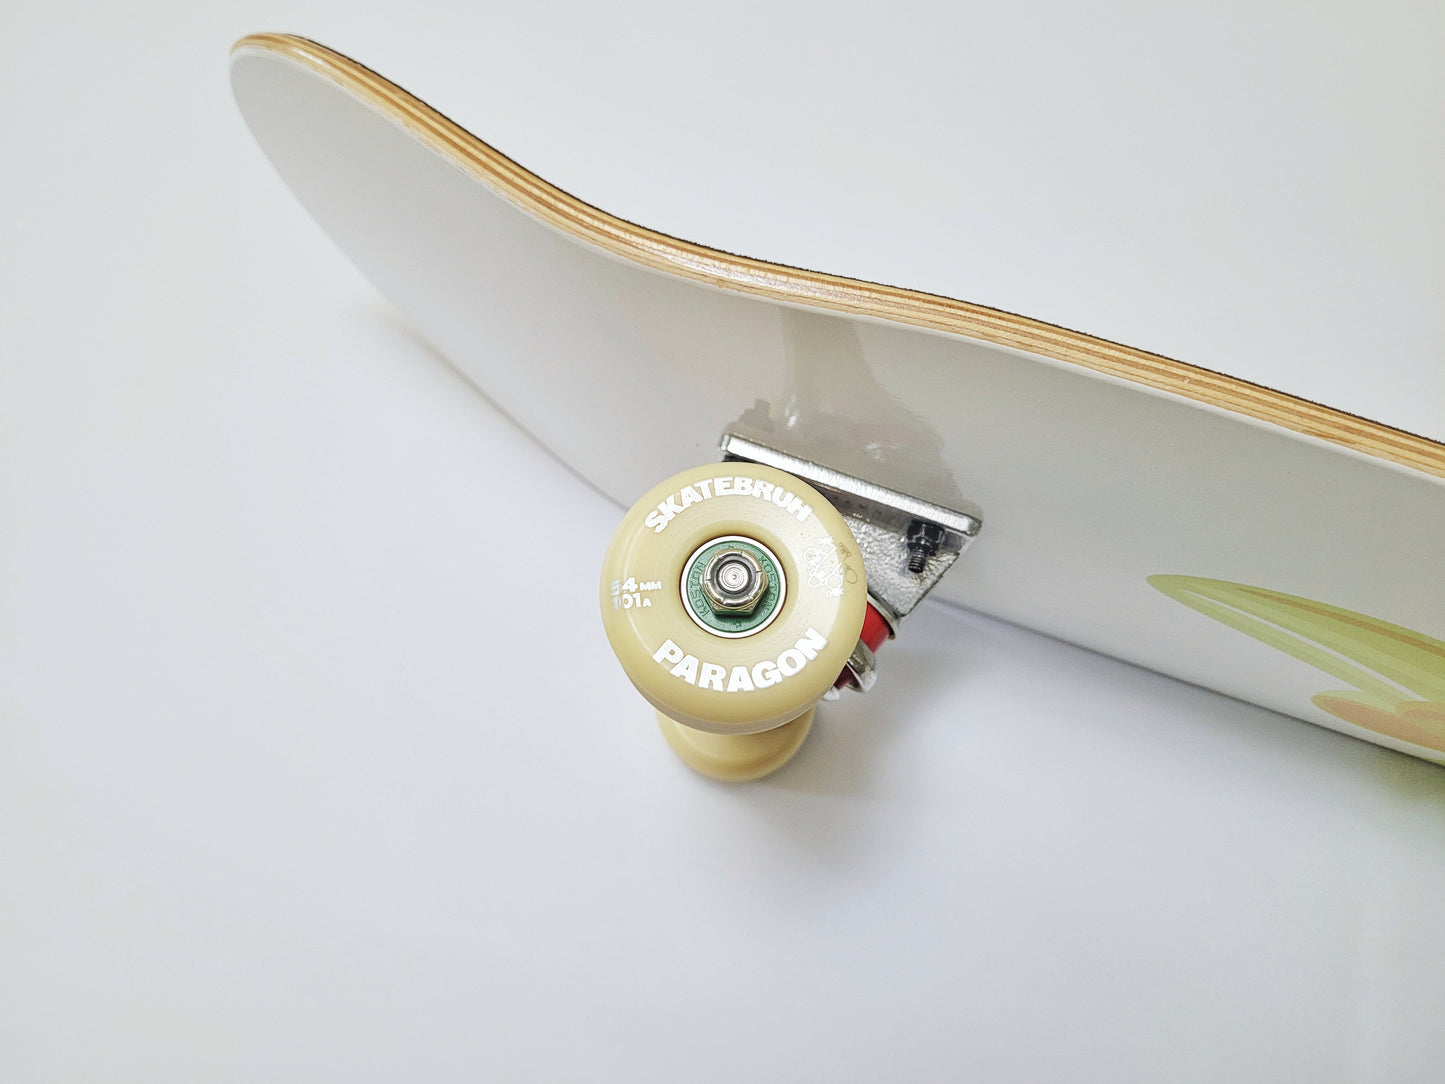 Skatebruh 'Mixed Fruits' Series Banana Skateboard - SkatebruhSG